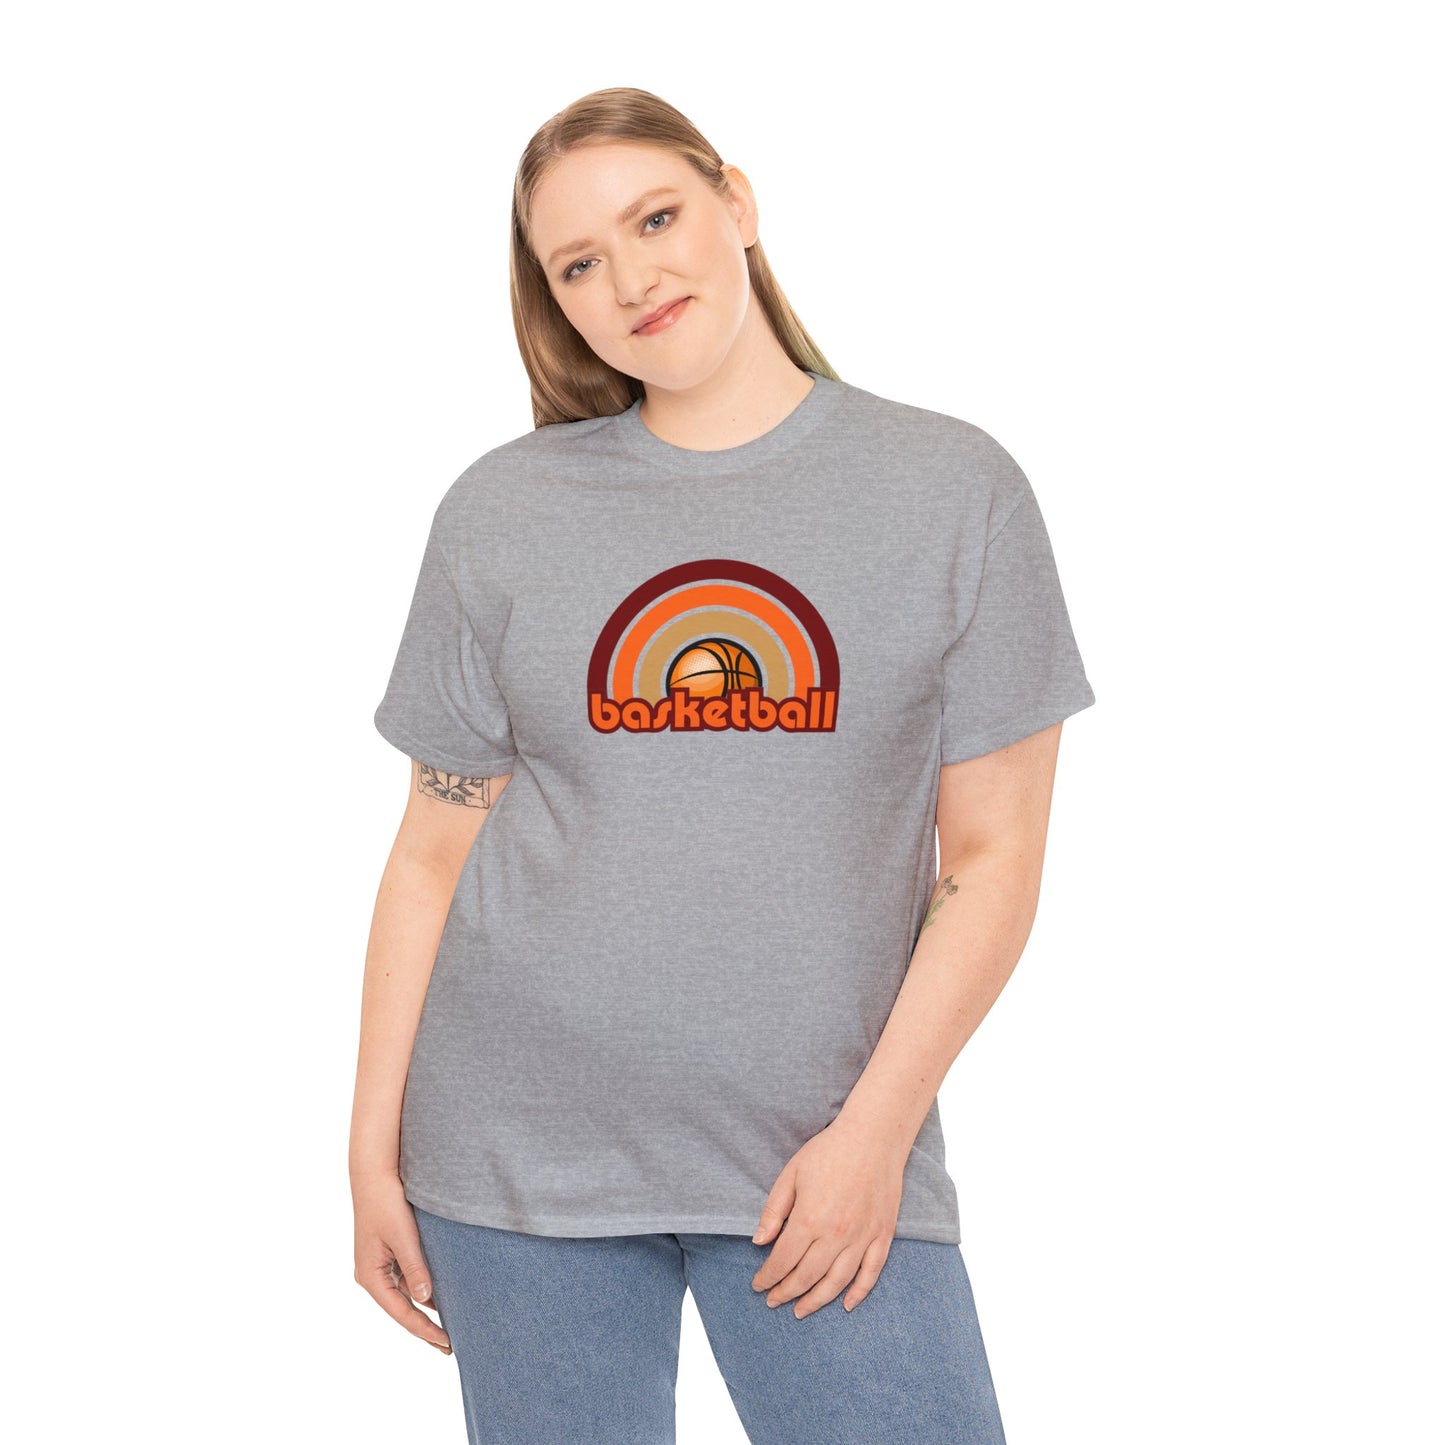 Basketball Rainbow, Basketball t-shirt design, Earth tone Colors, Basketball Gift, Classy Looking Basketball design, Women Basketball Gift